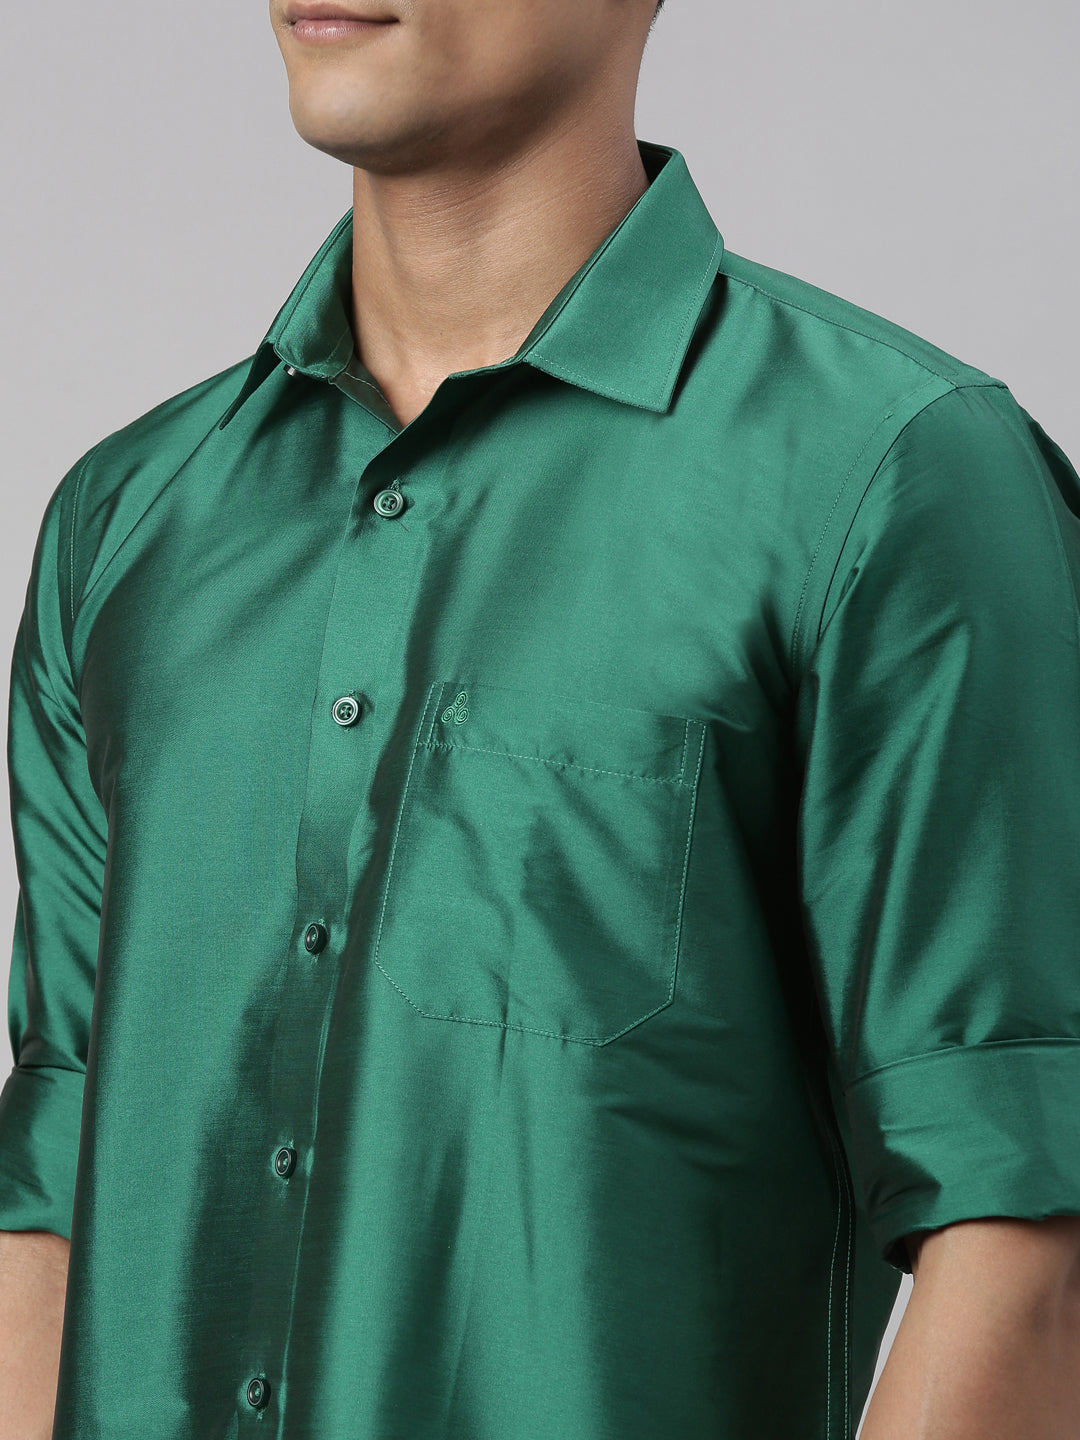 Tattva Mens Green Colour Solid Party Shirt